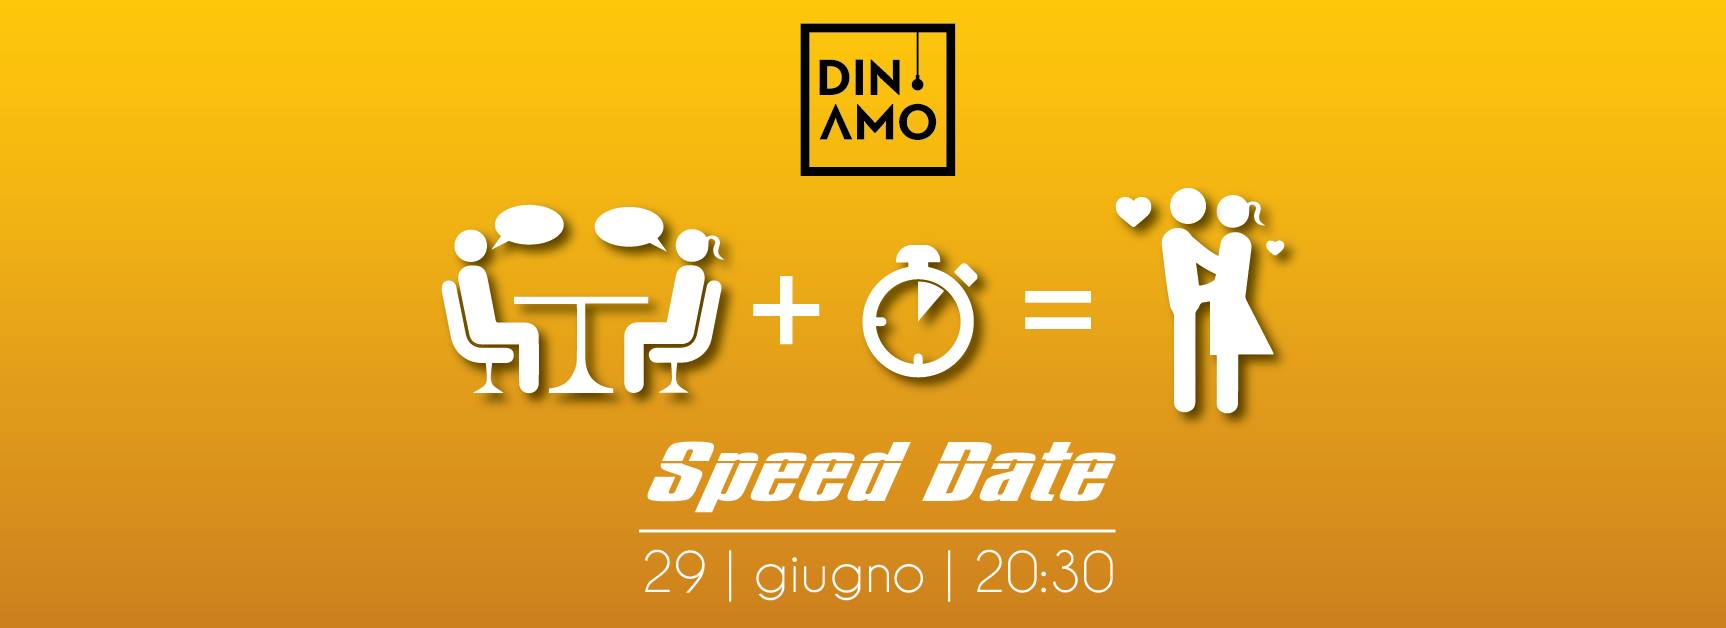 Taranto Speed Date @Dinamo